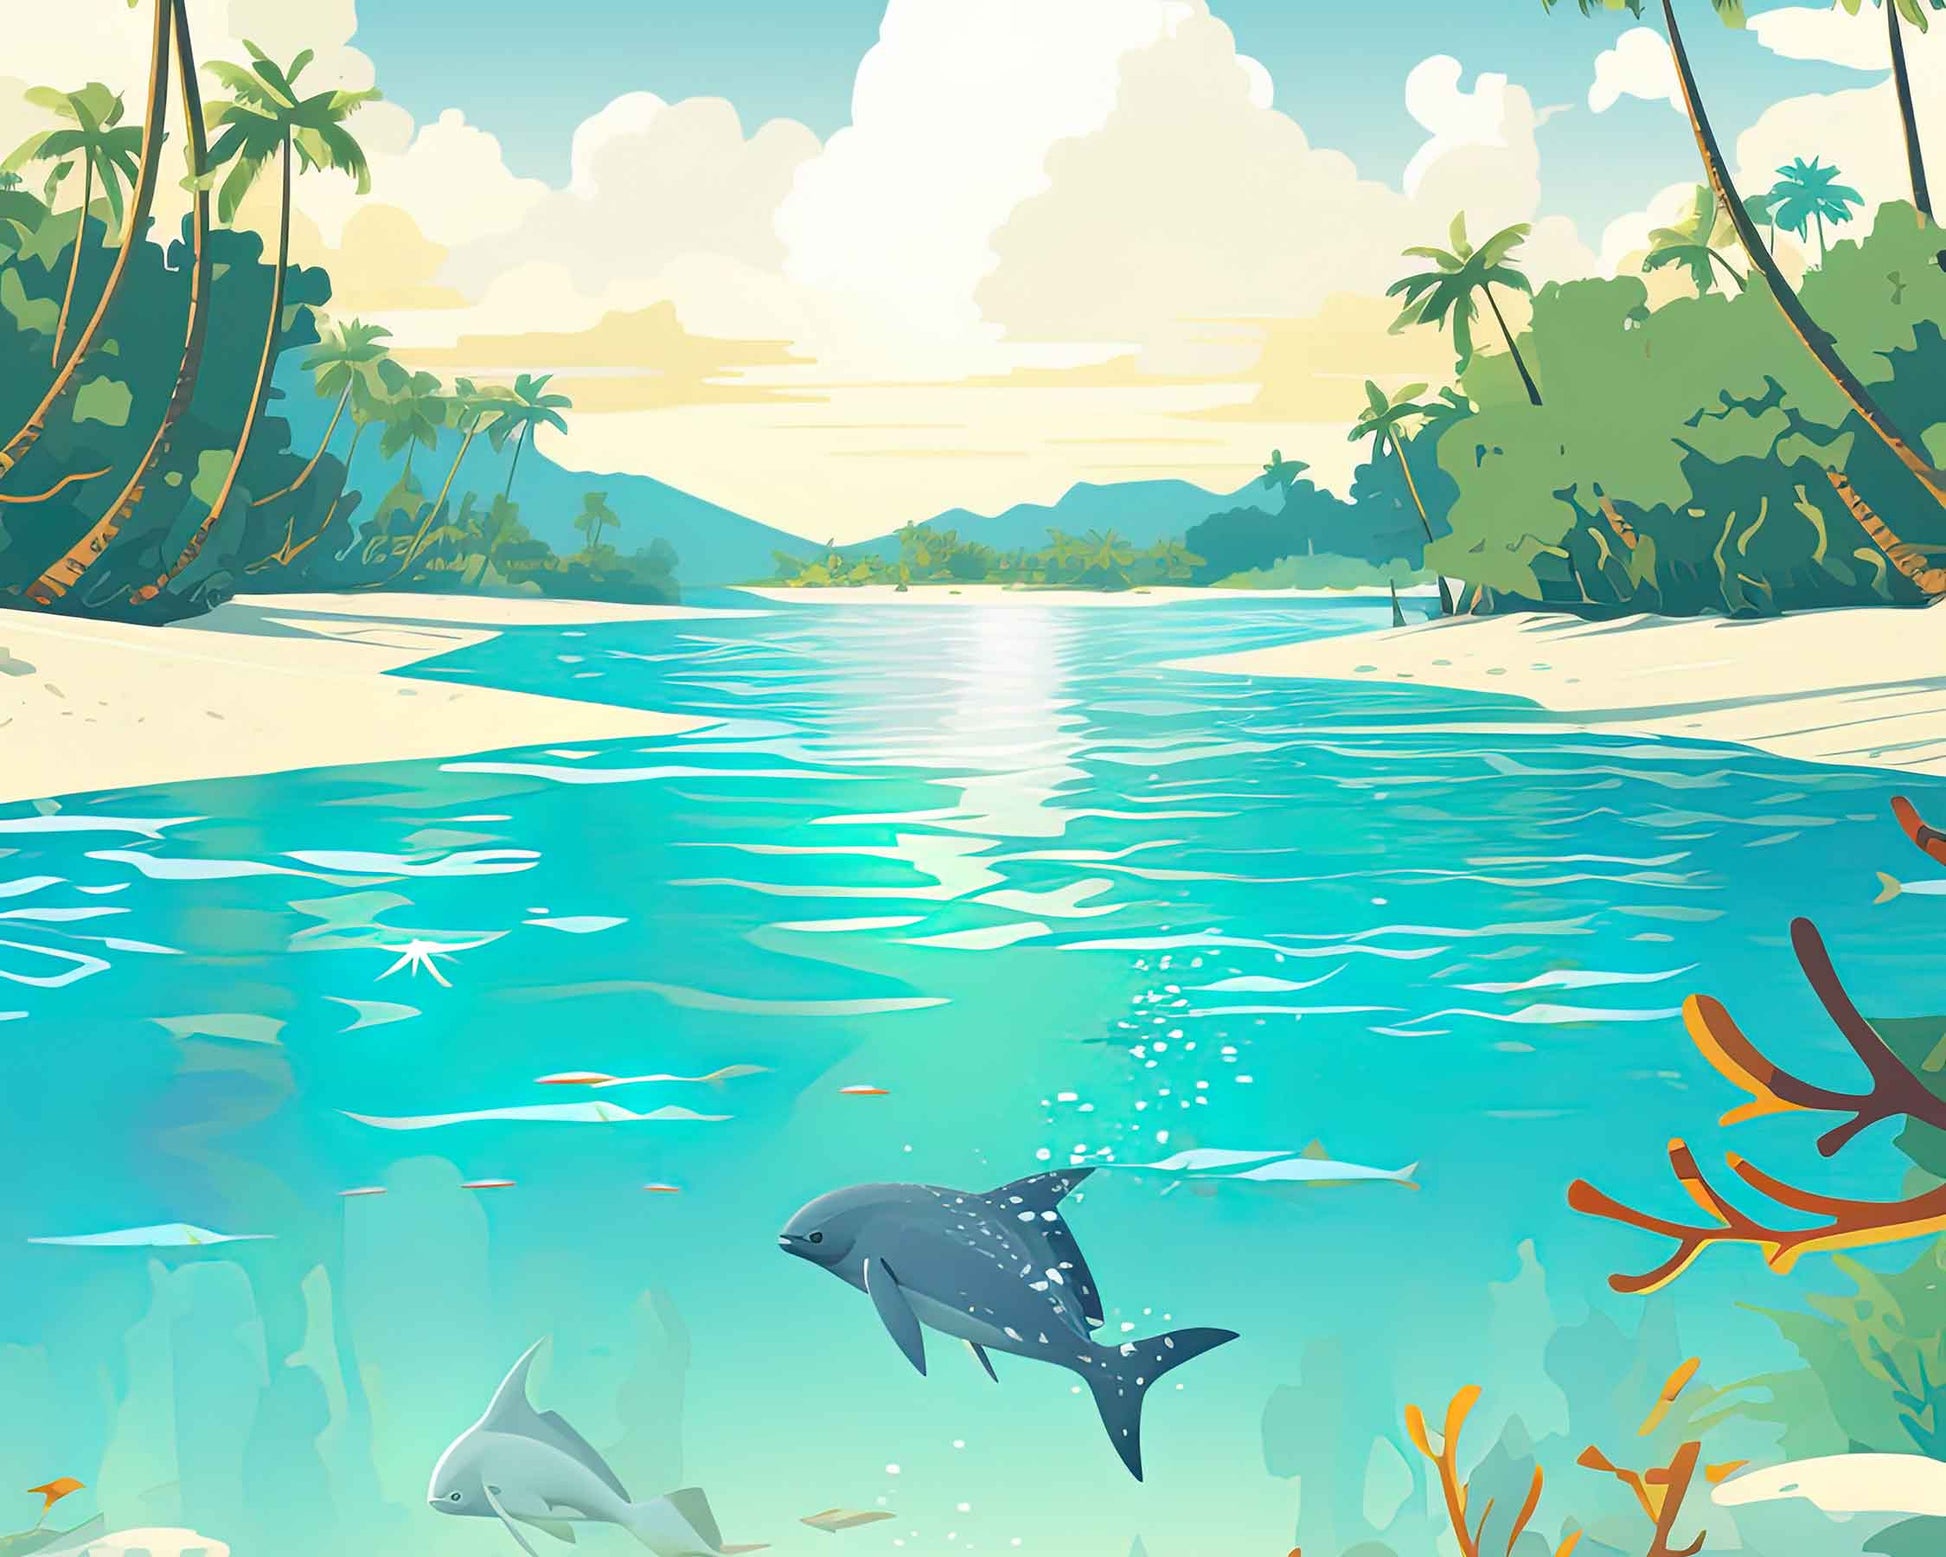 Framed Image of Maldives Travel Posters Tropical Wall Art Illustration Prints